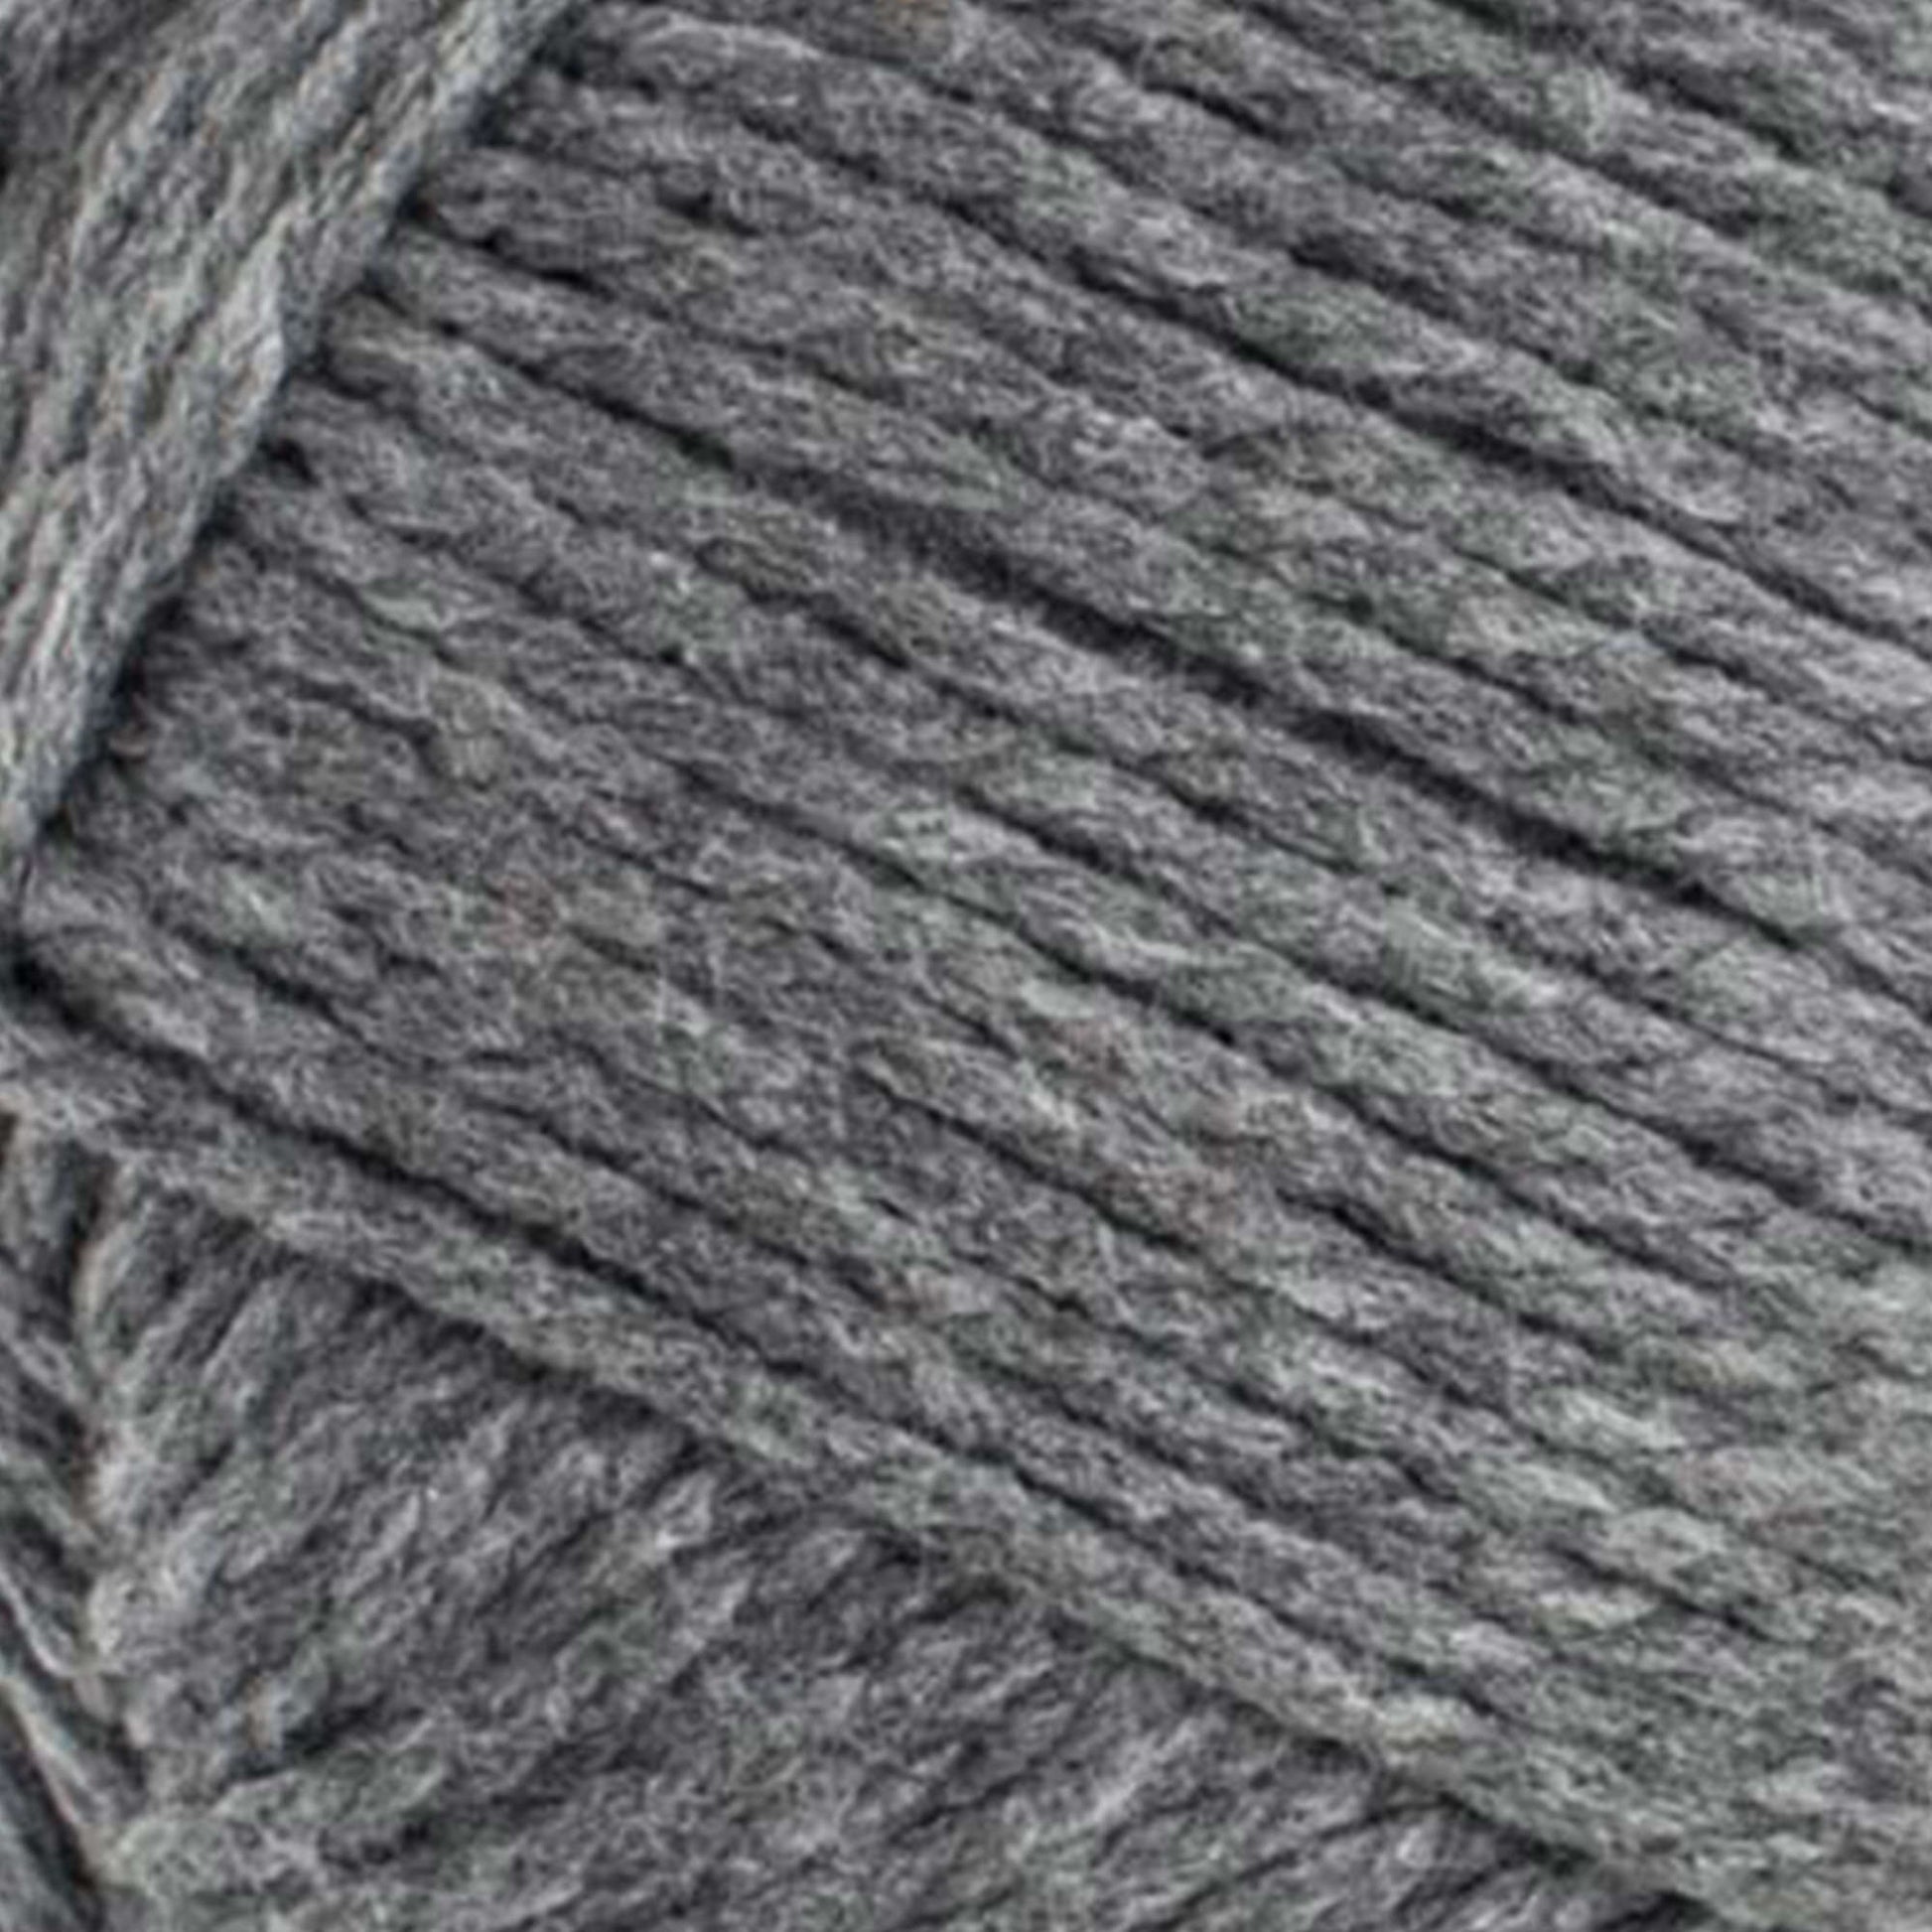 Bernat Softee Chunky Yarn – 100g – True Gray – Yarns by Macpherson